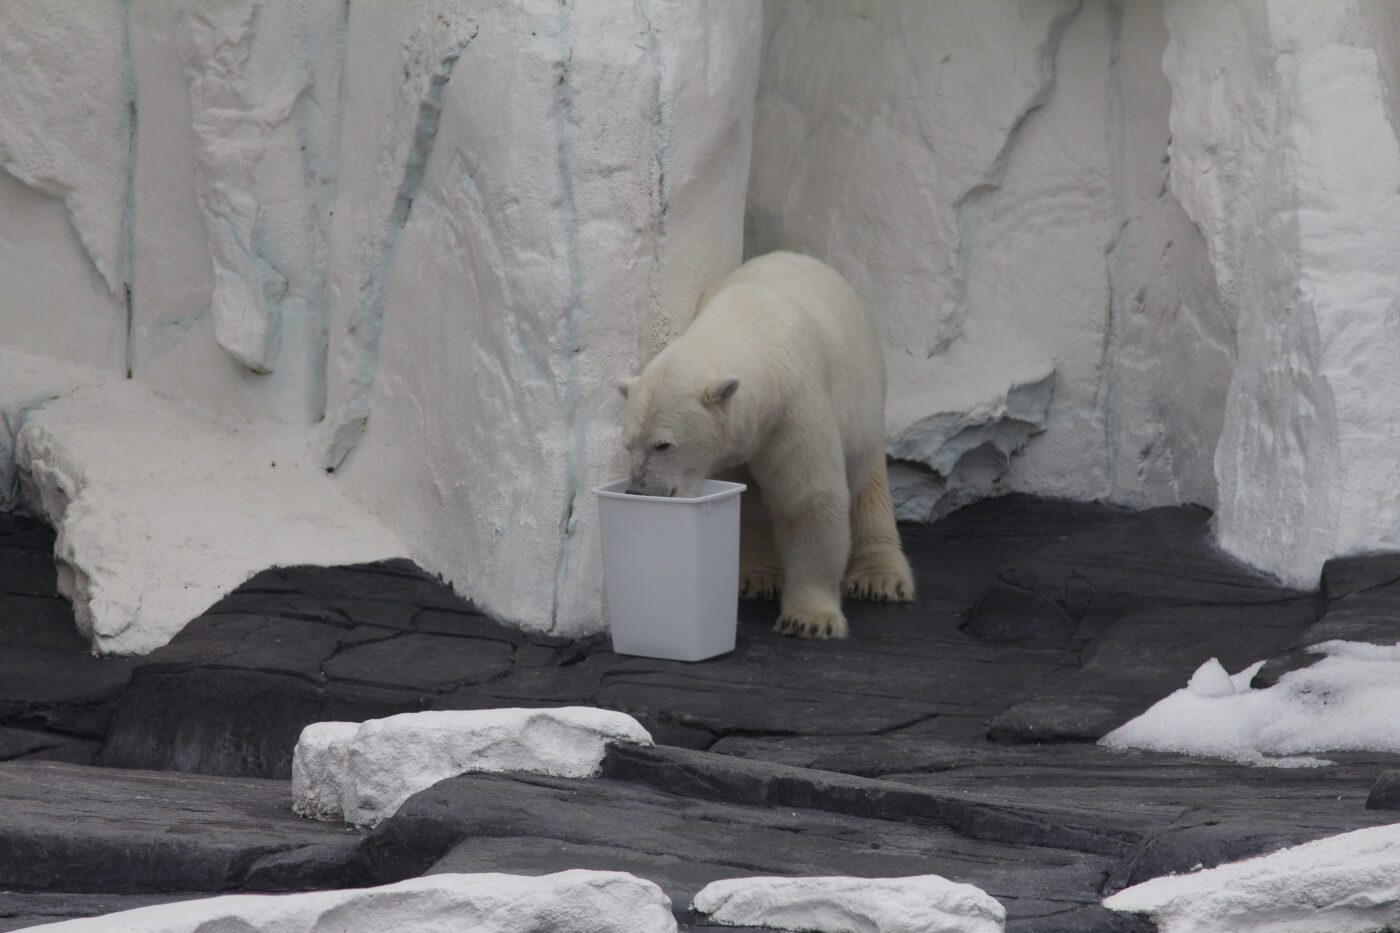 Szenja, the polar bear, drinking from a bucket.